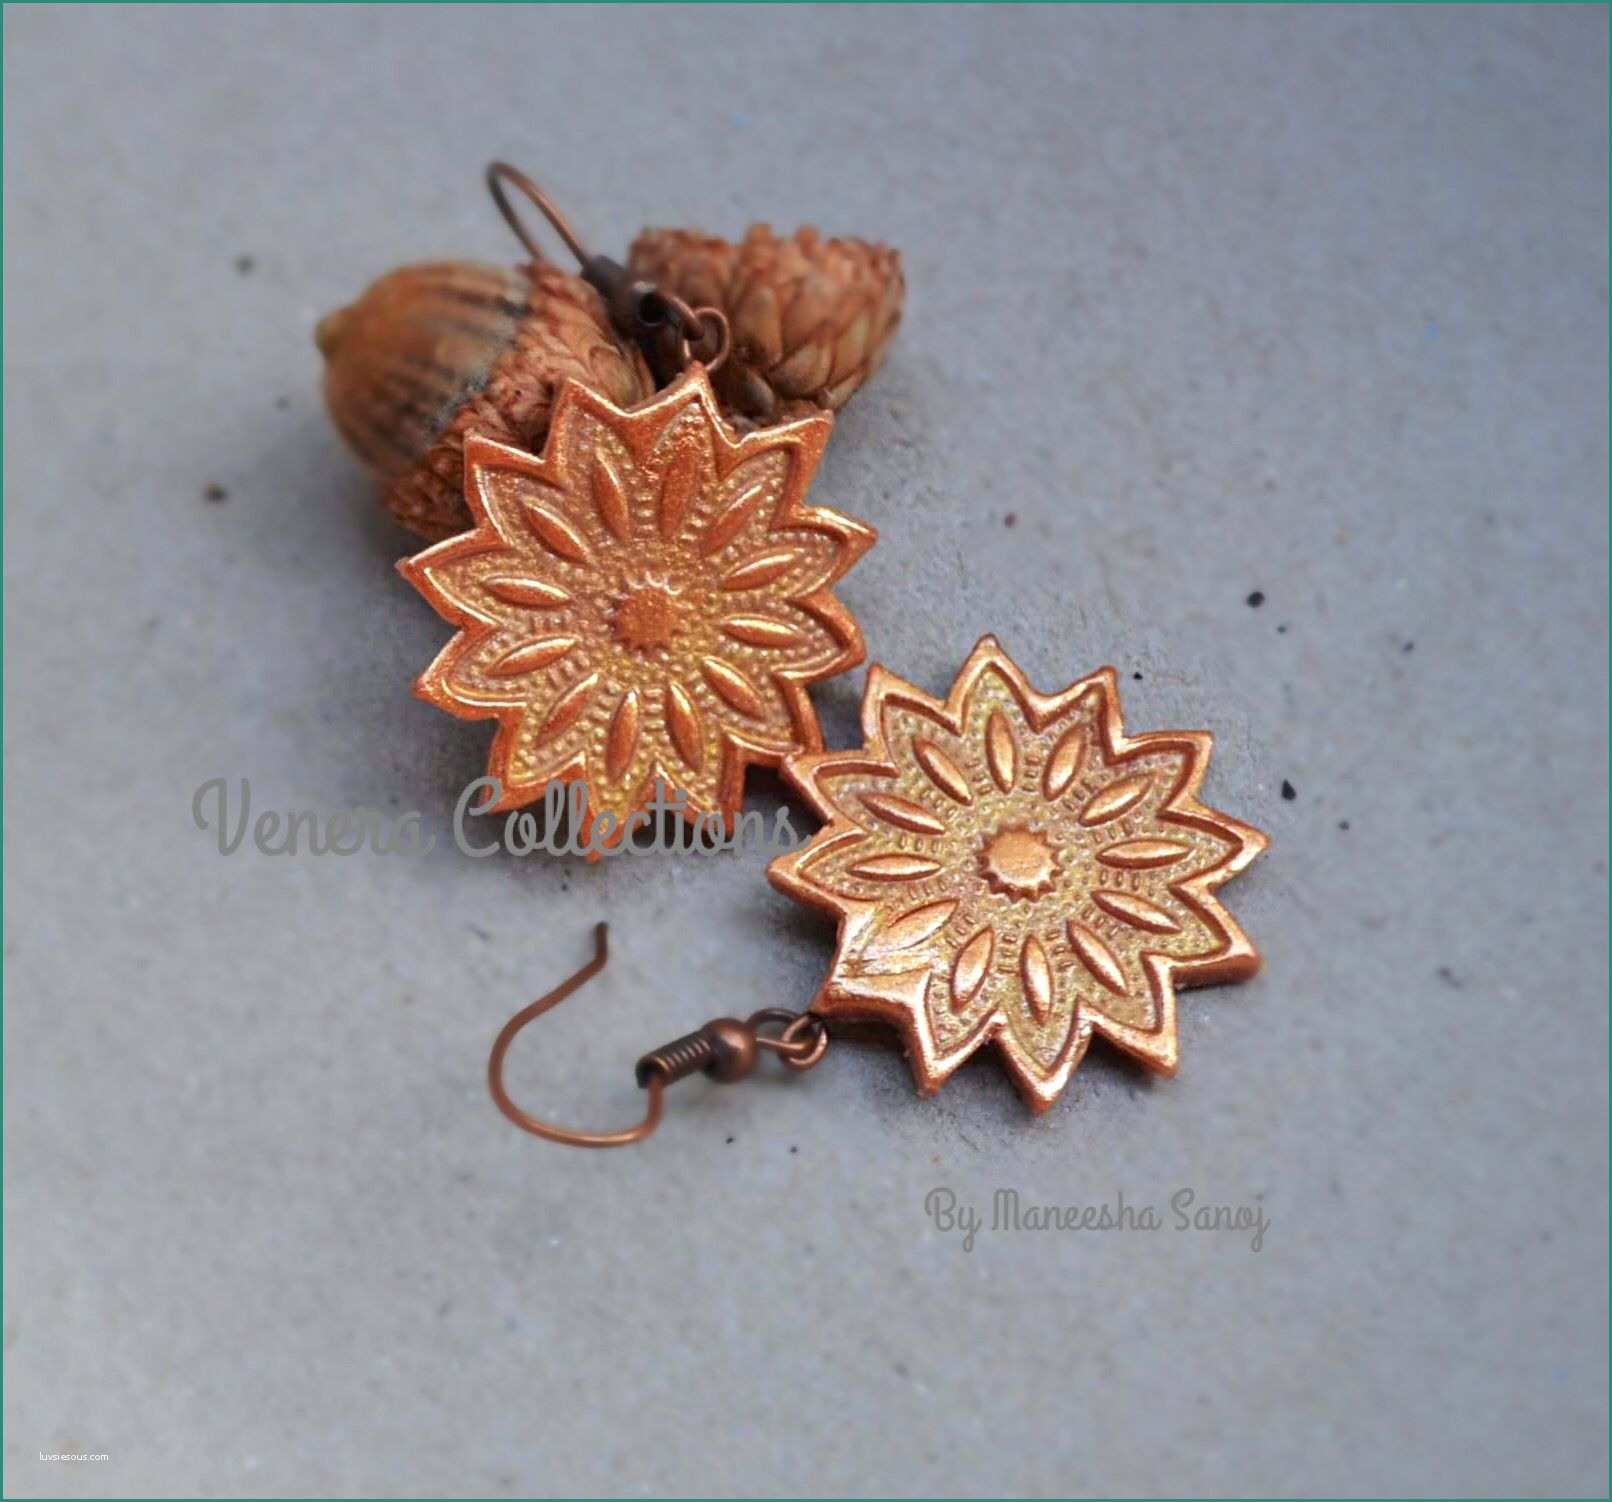 Parole Con Cu E Copper tone Flowers 36 52 Earrings Dangles Art Craft Hobby